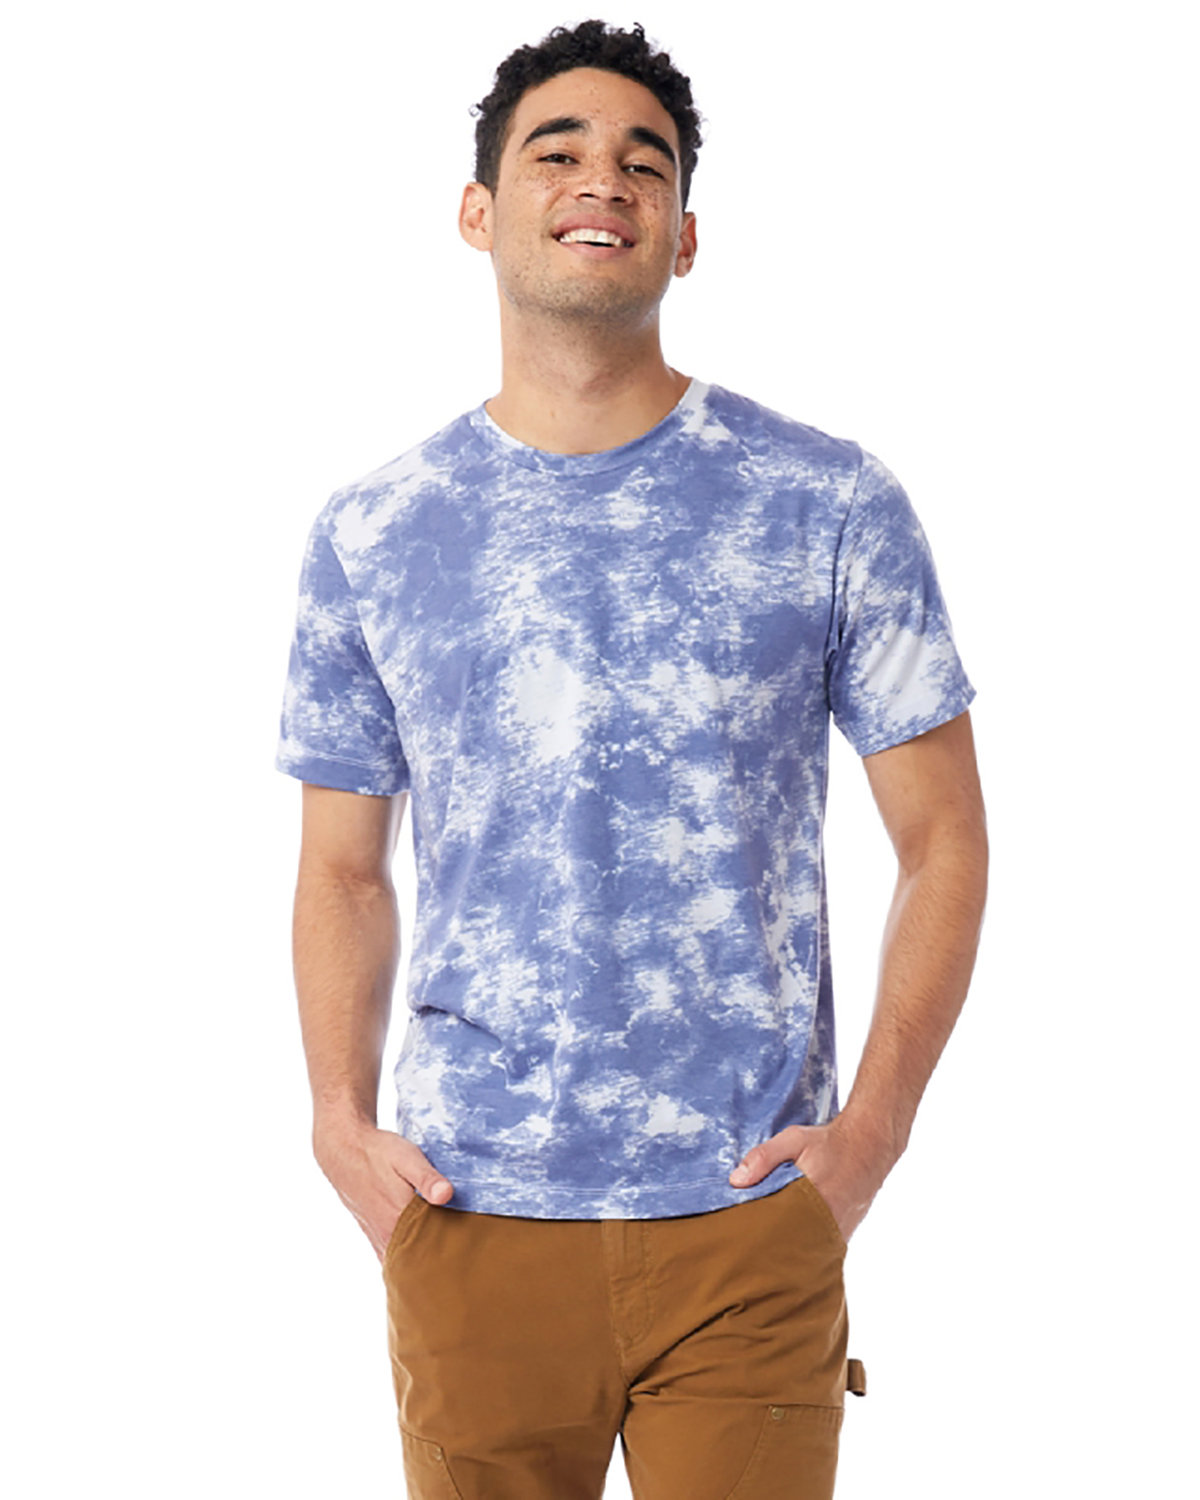 Tiedye USA Men's Tie Dye Camo T-Shirt (Medium)